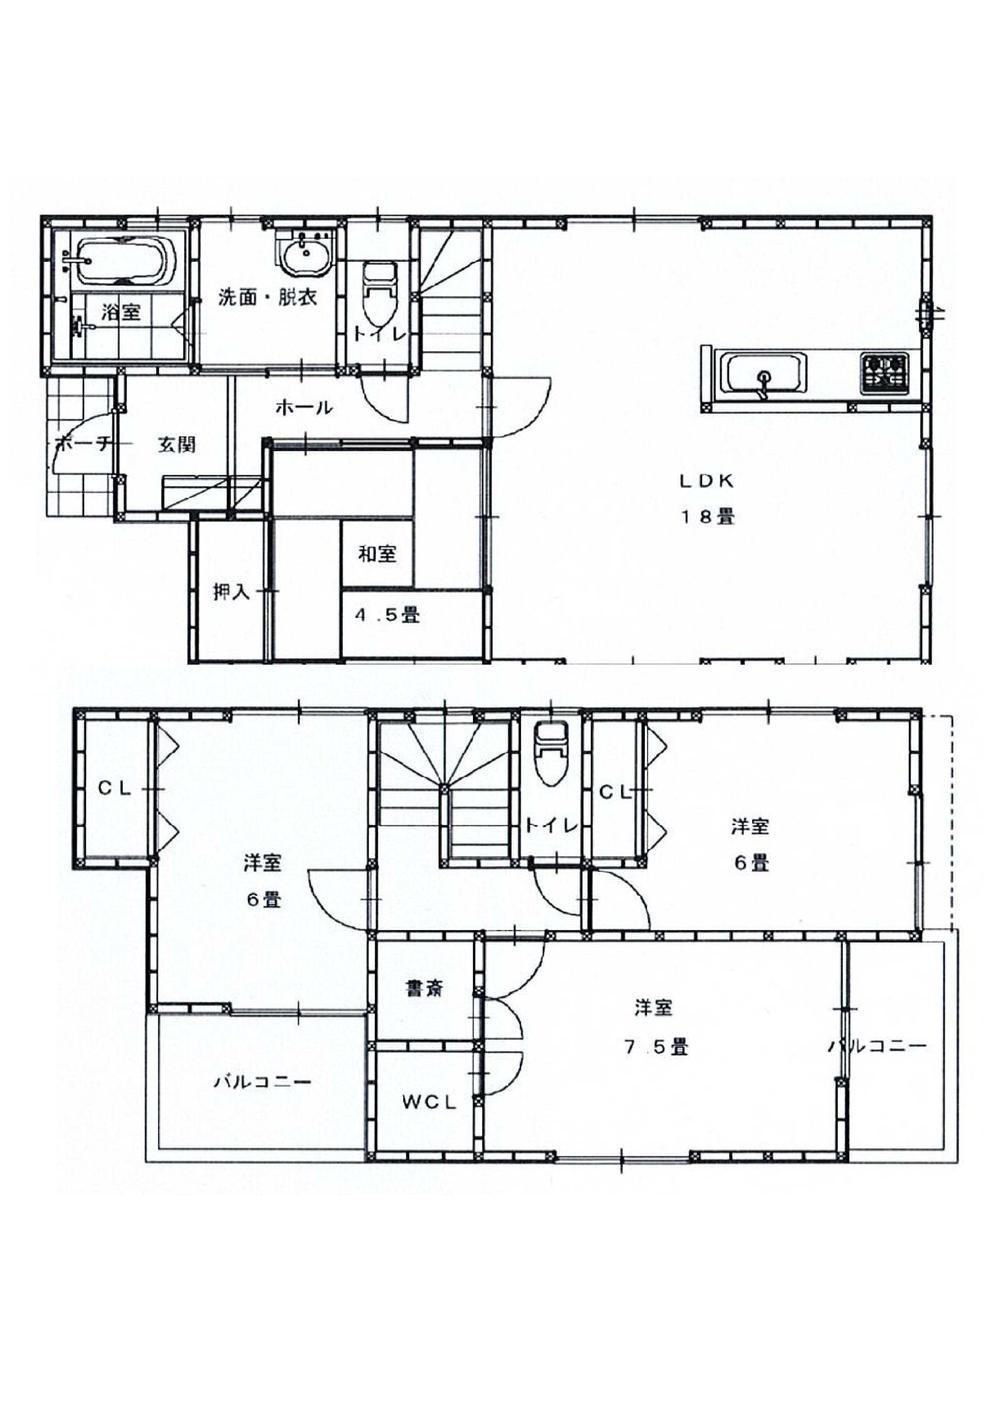 Building plan example (floor plan). Building plan example (Building 2) 4LDK, Land price 24,300,000 yen, Land area 110.25 sq m , Building price 15 million yen, Building area 101.02 sq m